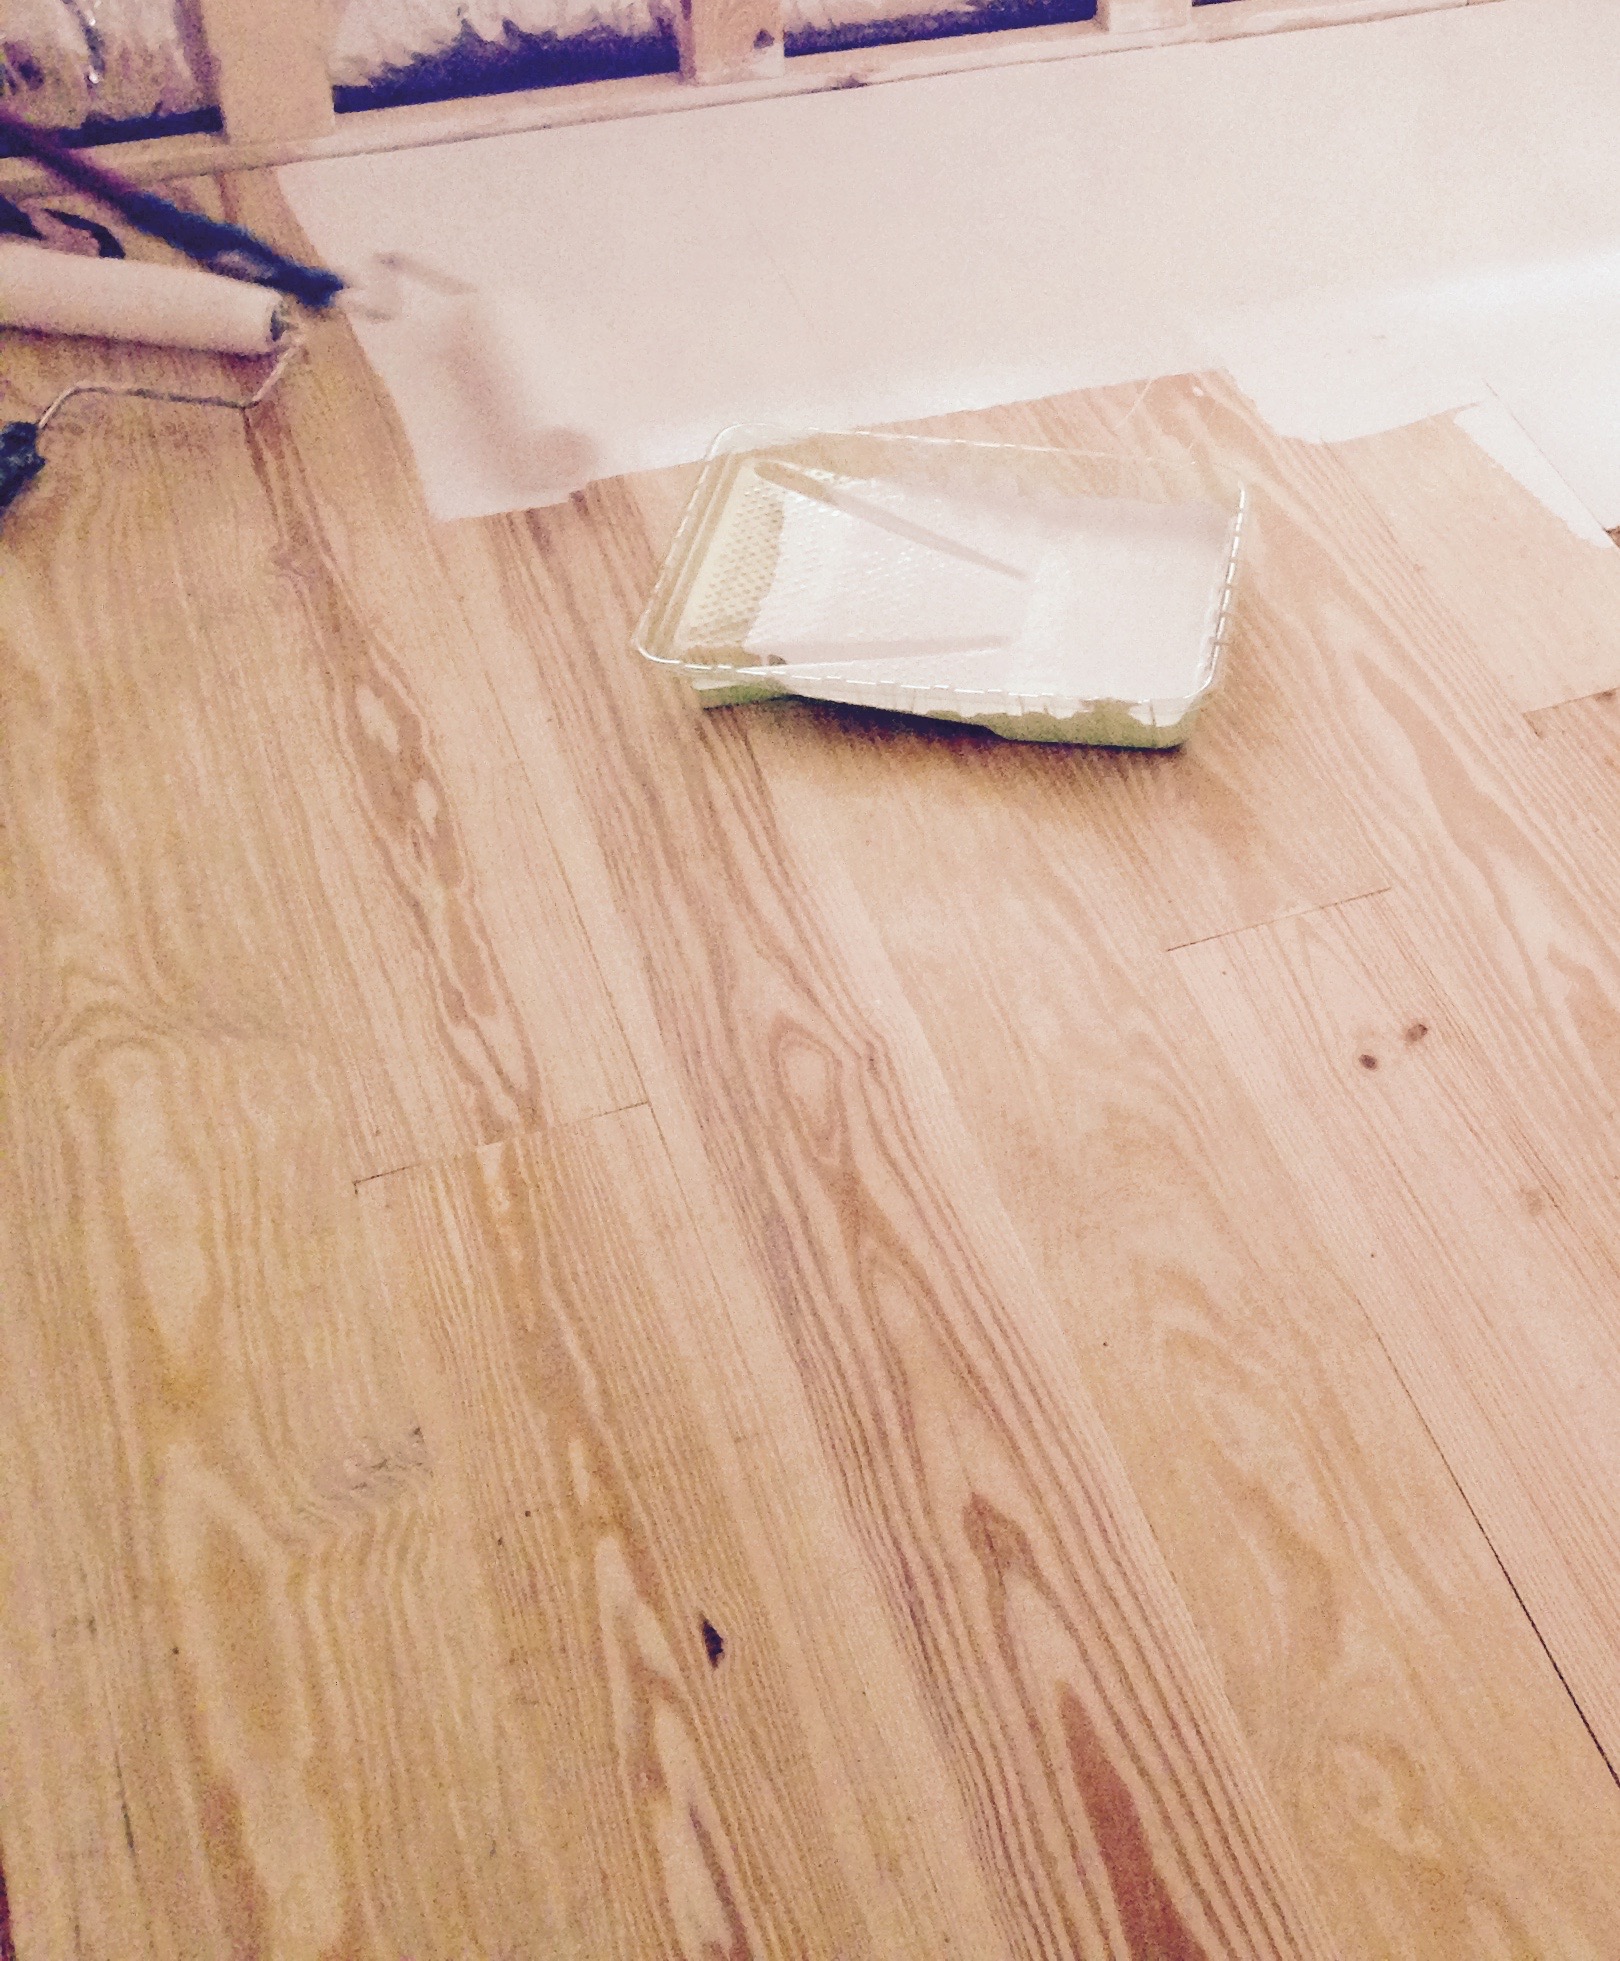 distressed wood flooring how to paint wood floors THQQMHK